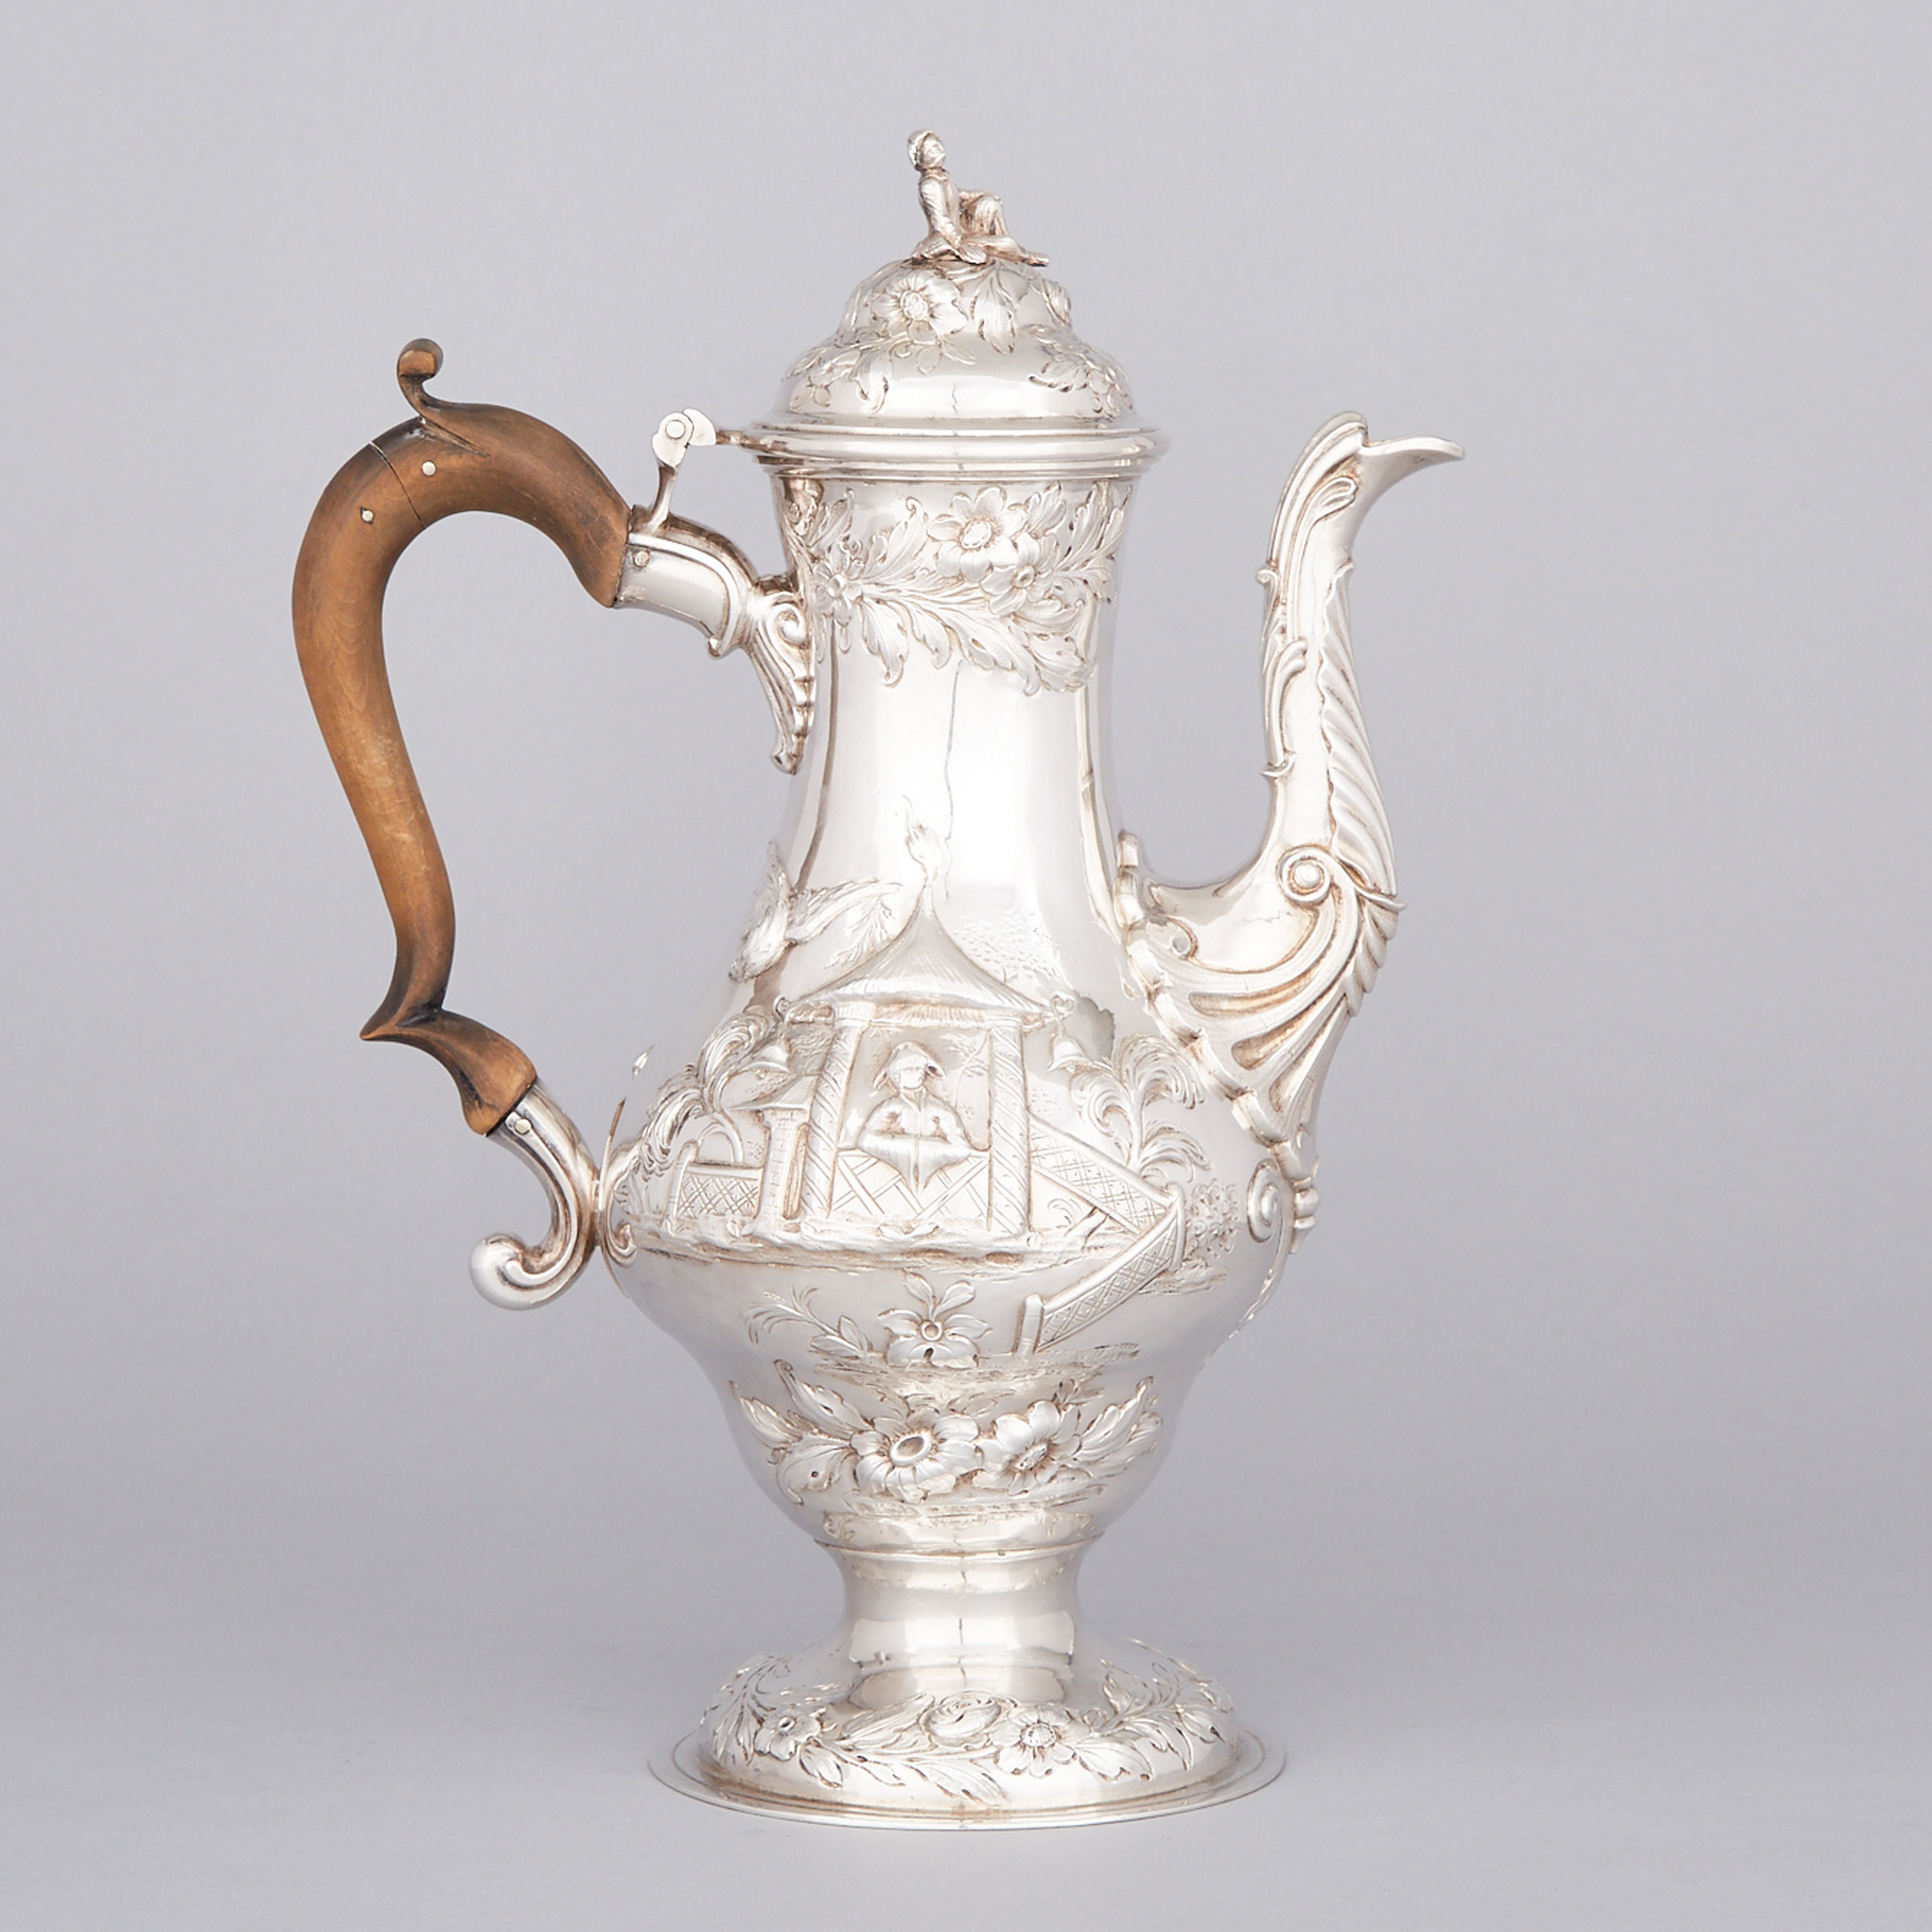 George III Silver Chinoiserie Coffee Pot, London, 1764